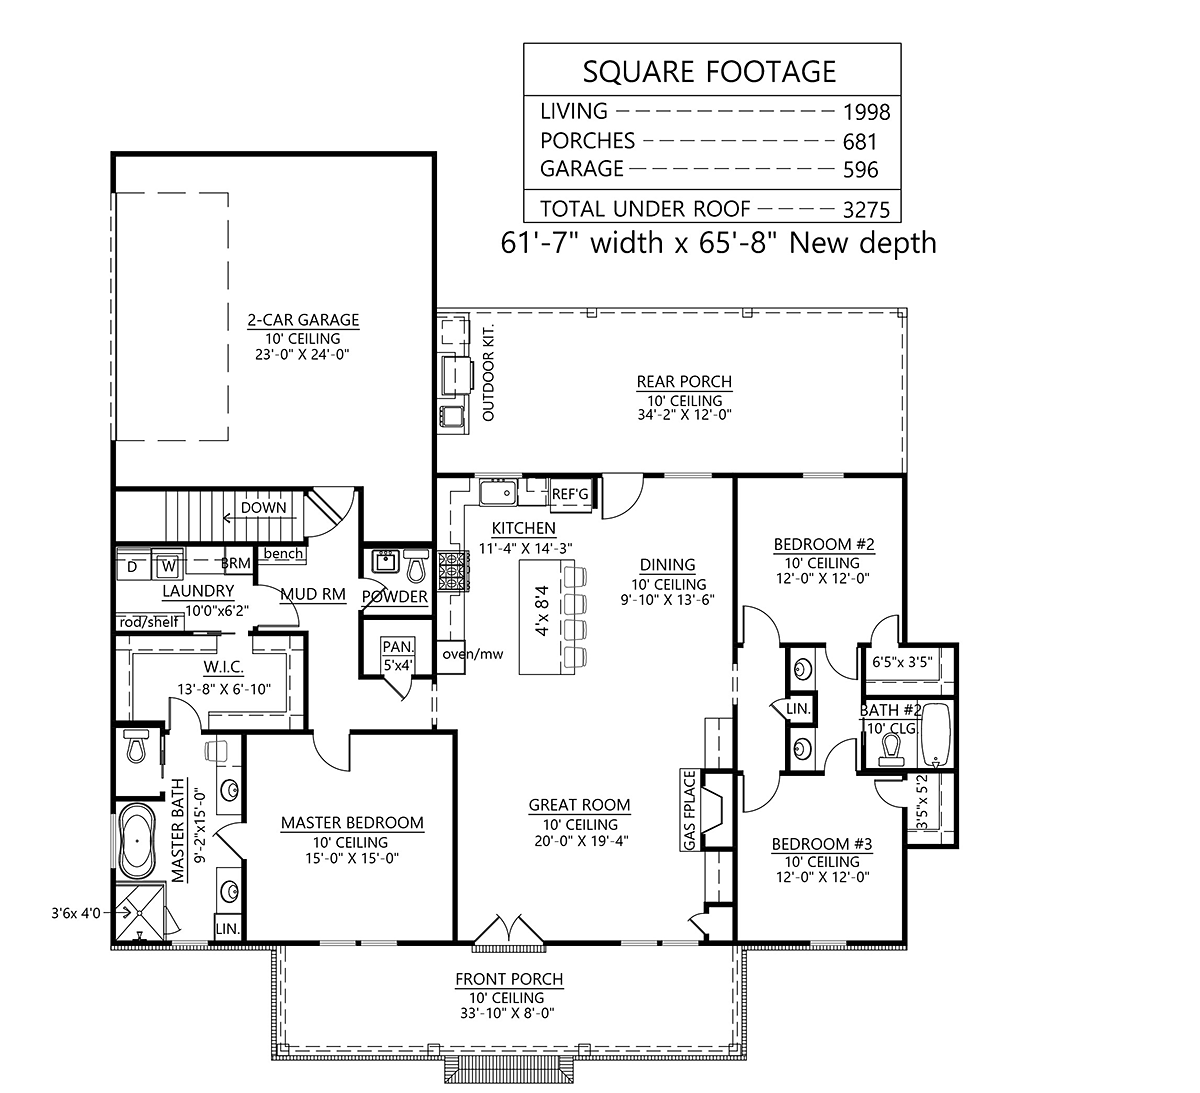 House Plan 41438 Alternate Level One